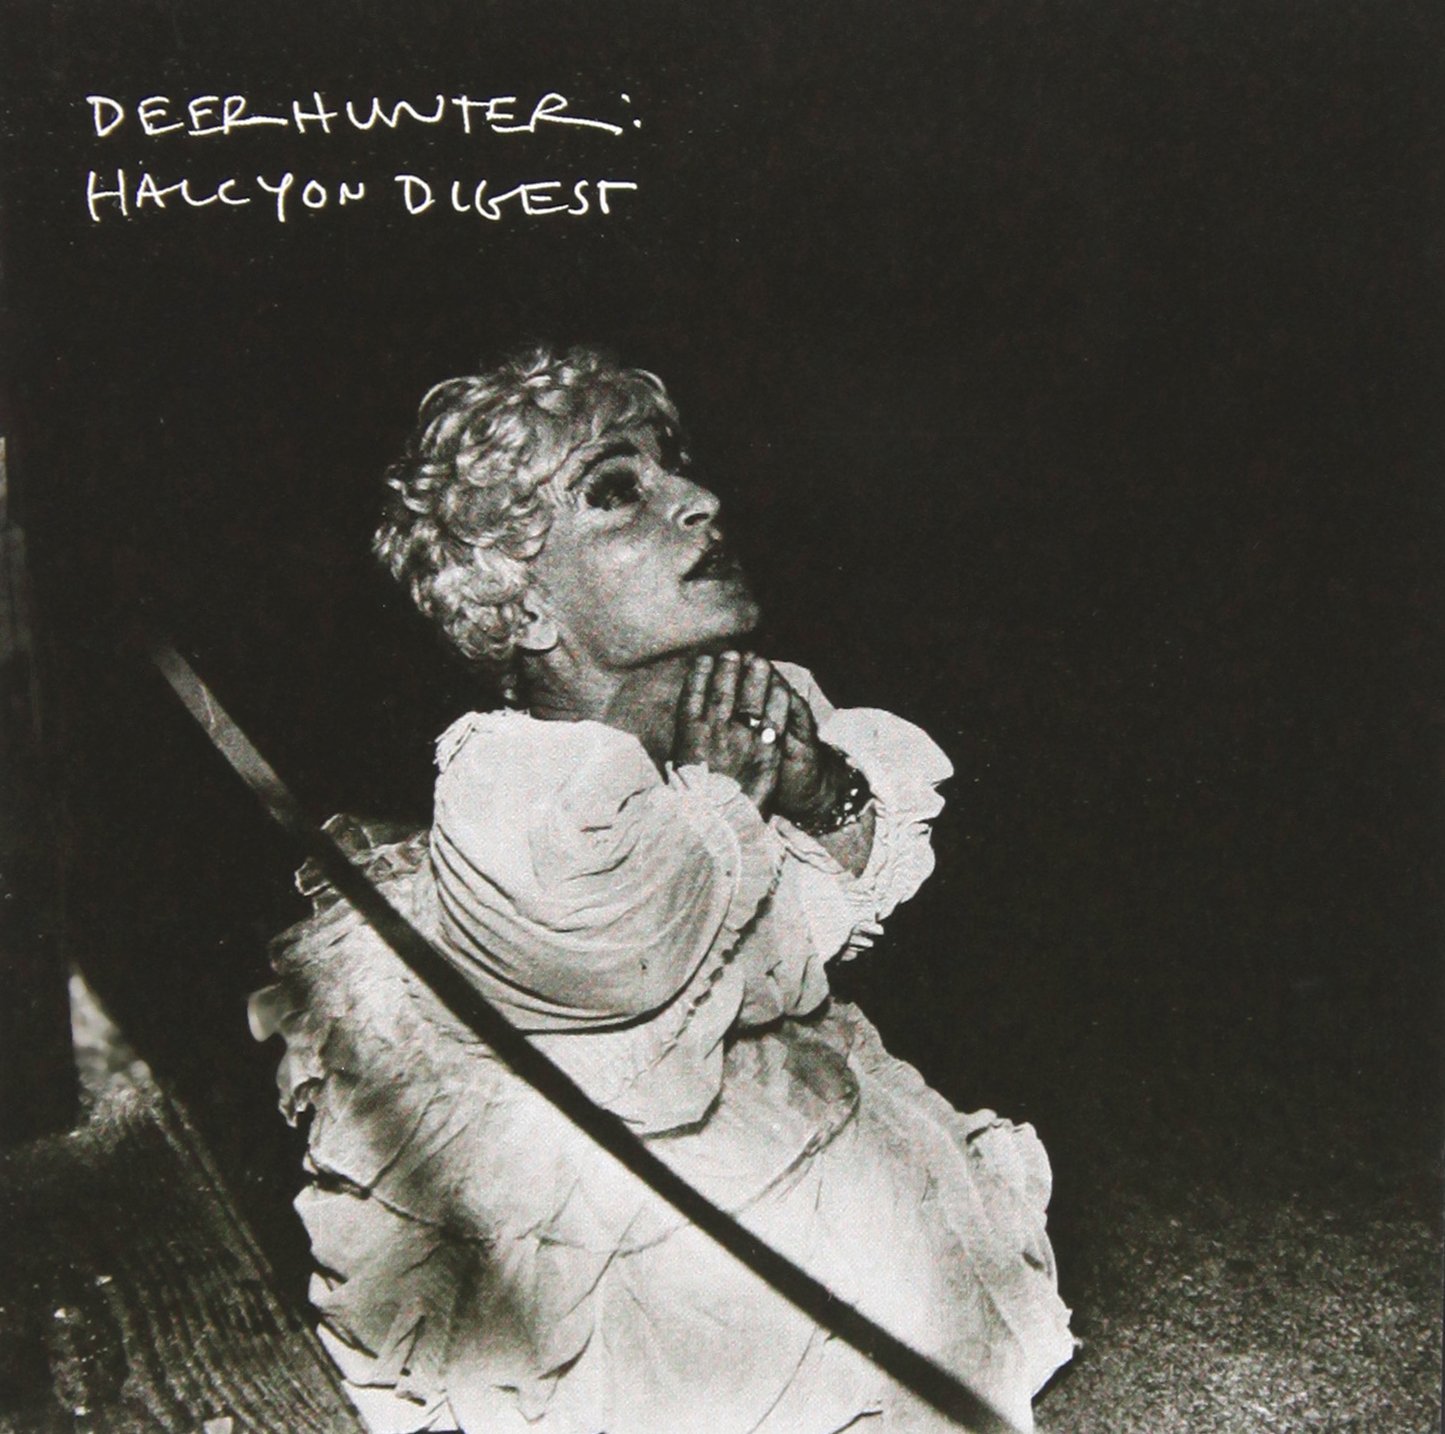 Deerhunter "Halcyon Digest" LP